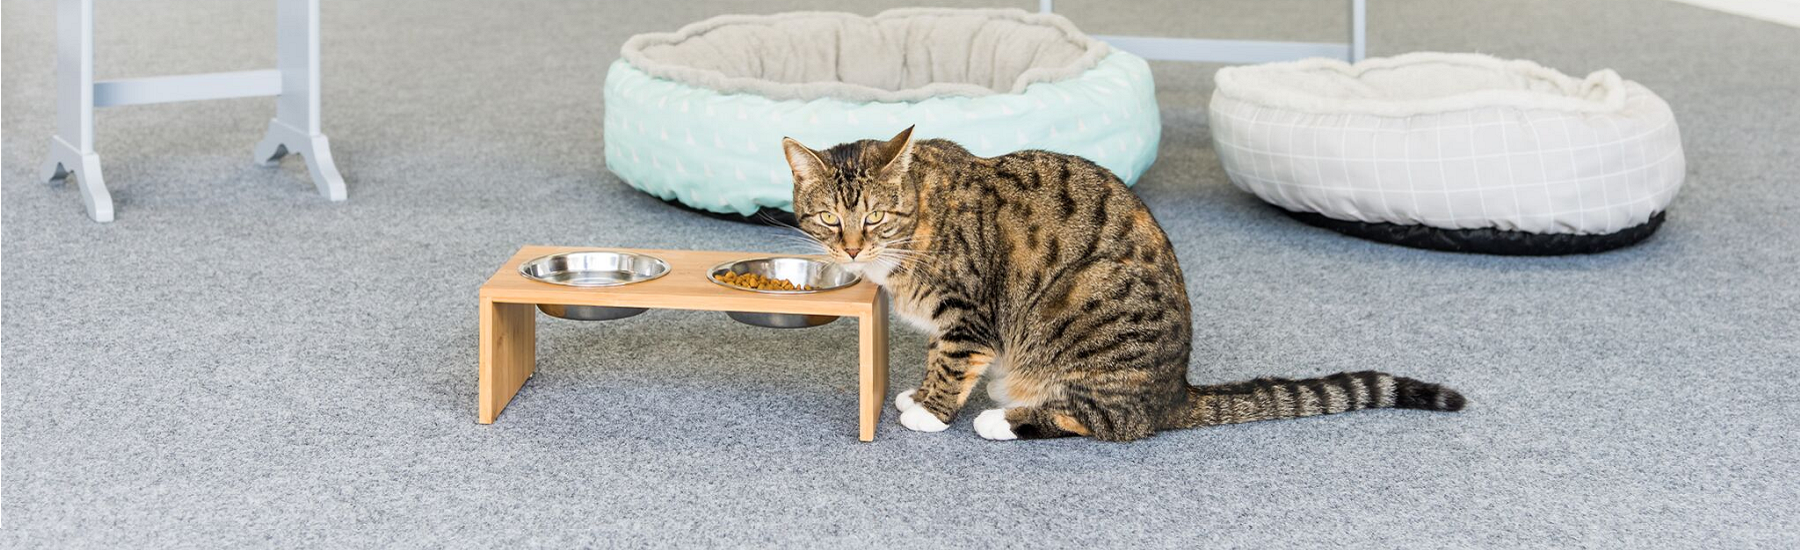 Cat eating its food on top of garage carpet